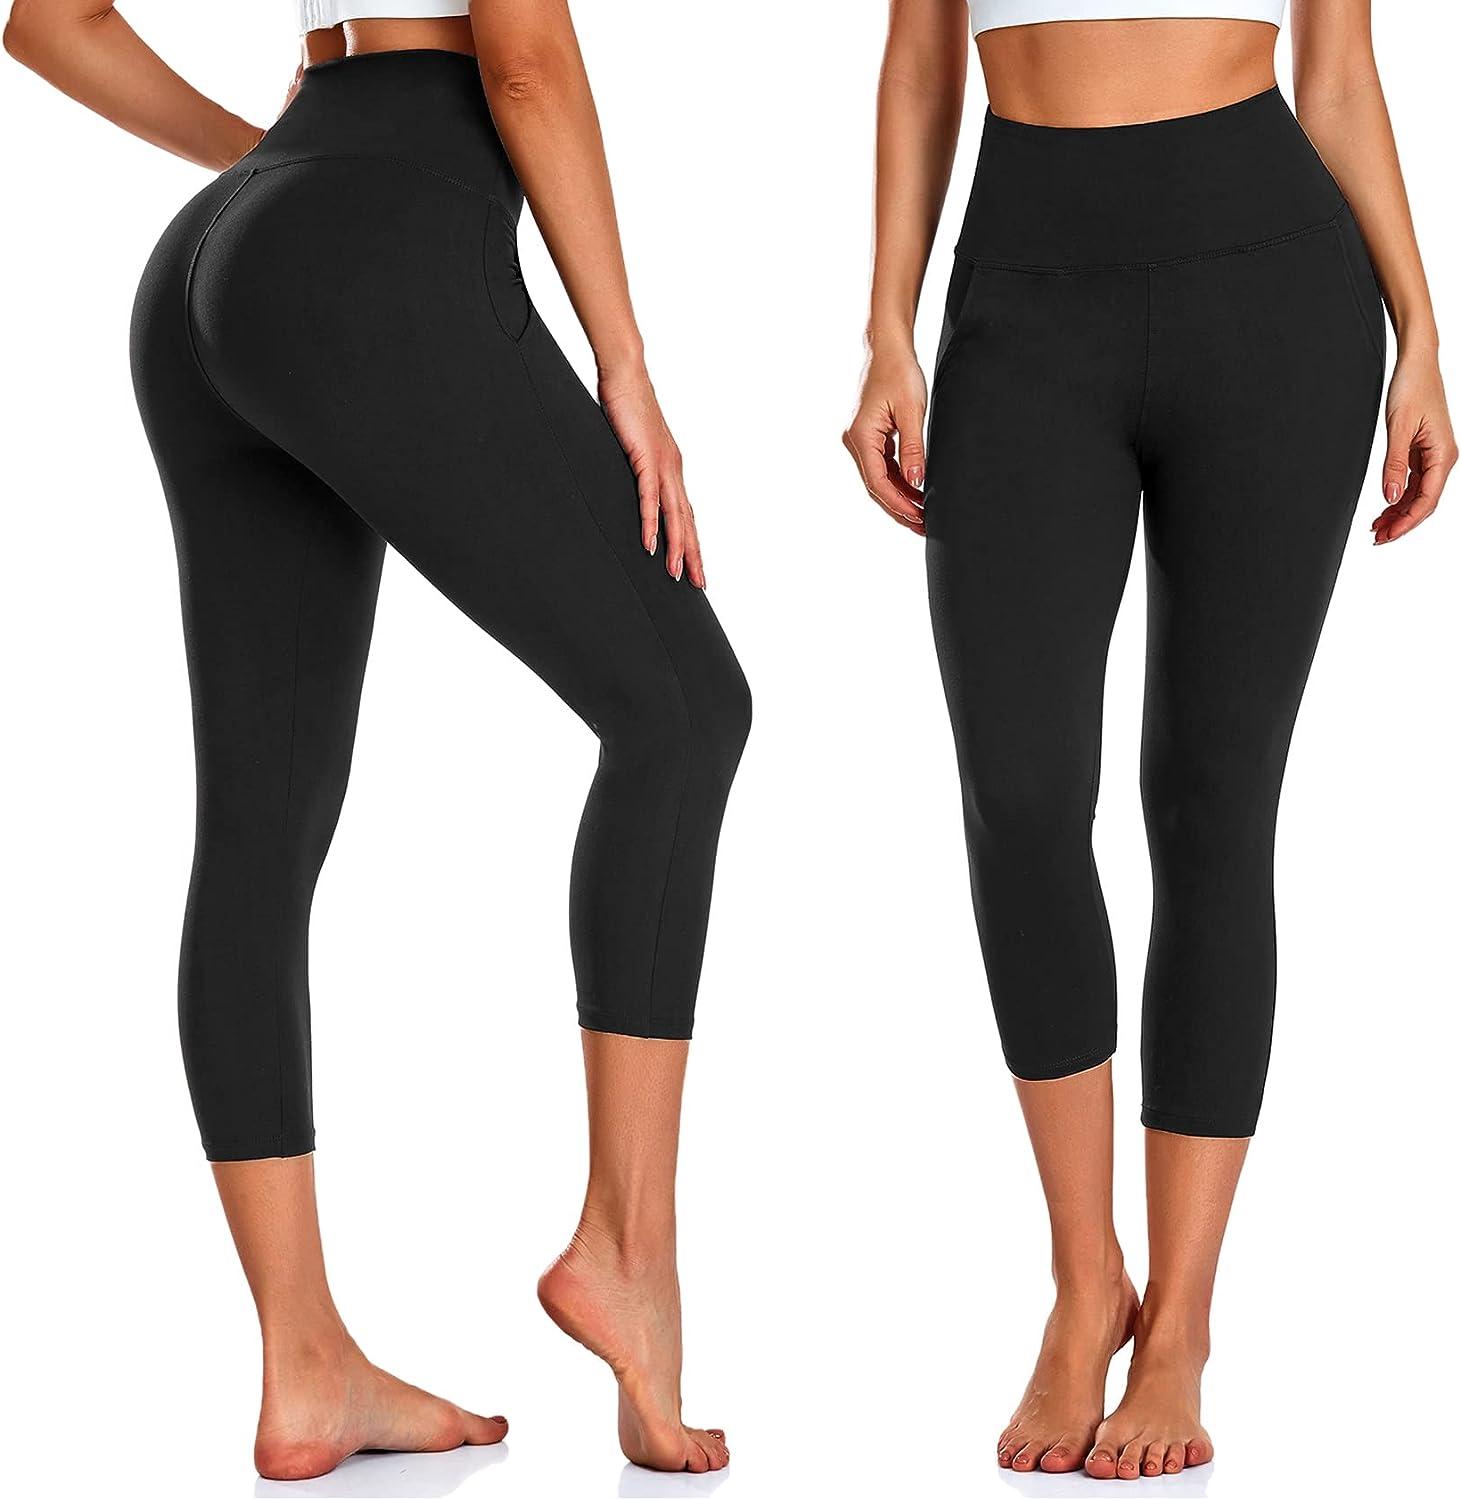  yeuG Plus Size Capri Leggings for Women-Stretchy X-Large-4X  Tummy Control High Waist Spandex Workout Black Yoga  Pants(Black,Navy,3X-Large) : Clothing, Shoes & Jewelry